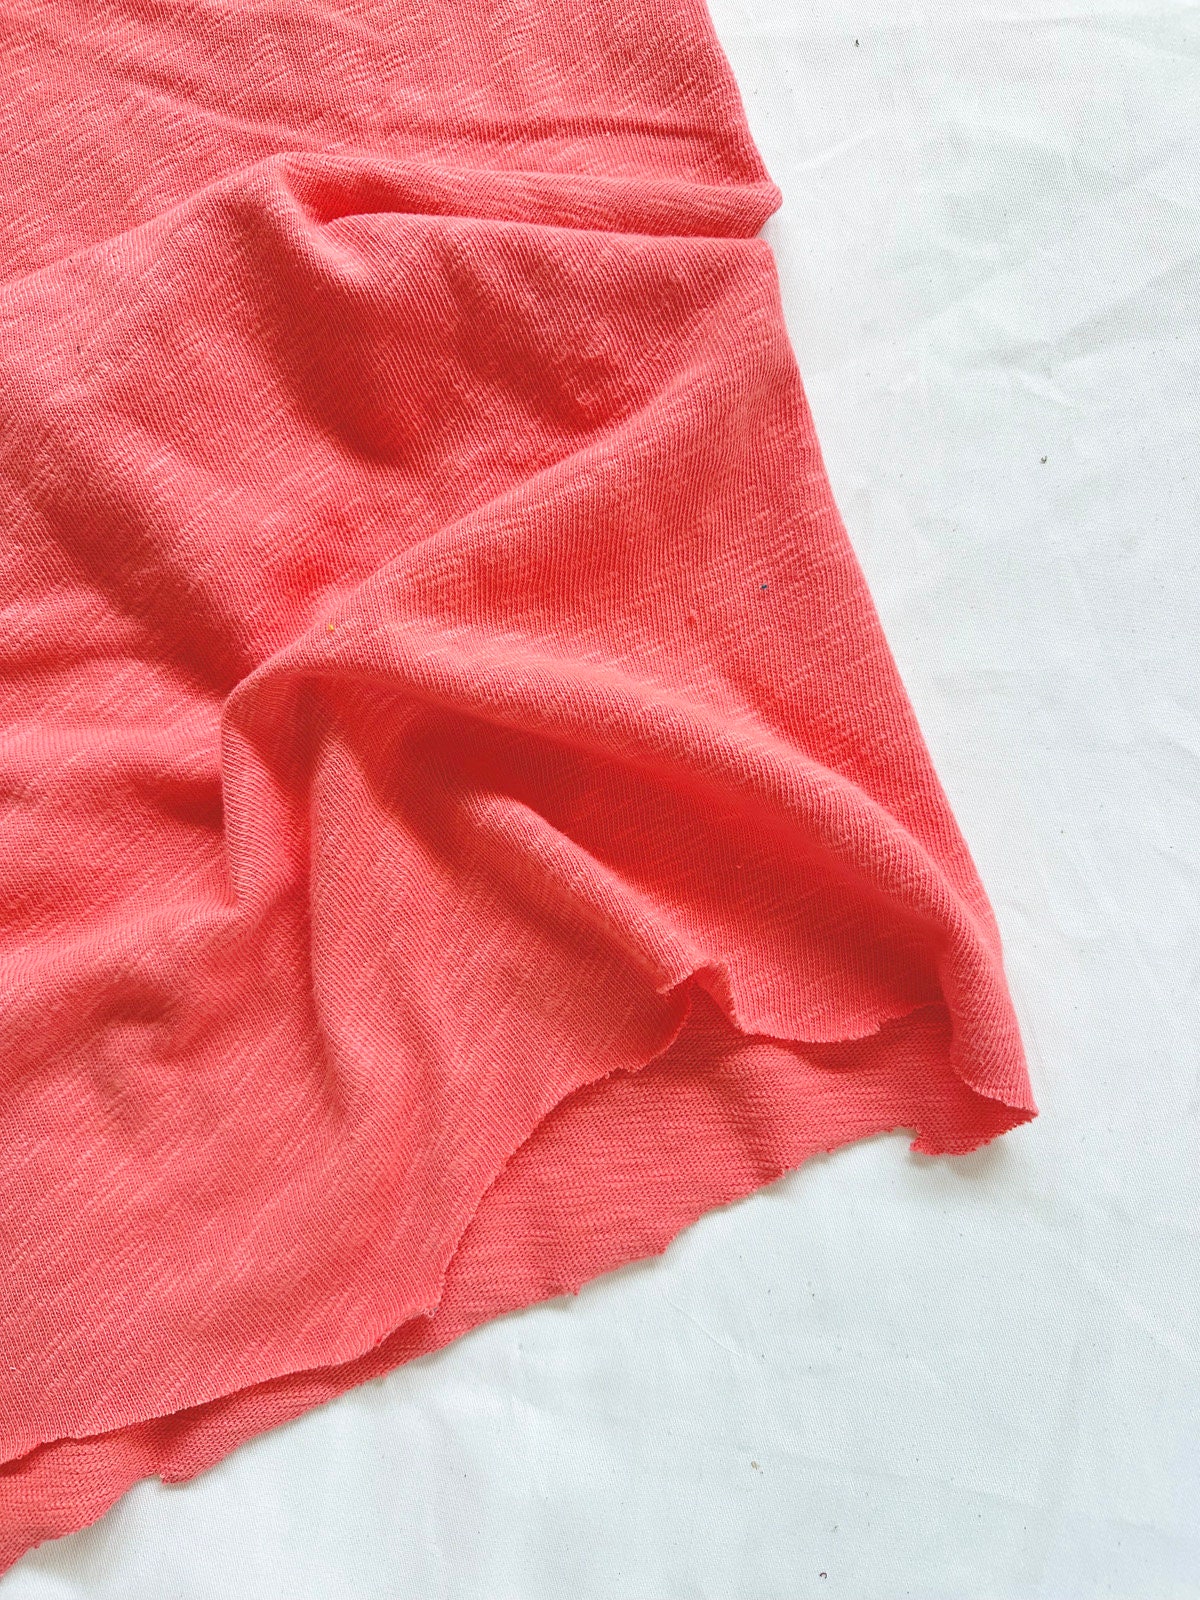 Slub Jersey Knit Fabric - 2428PR